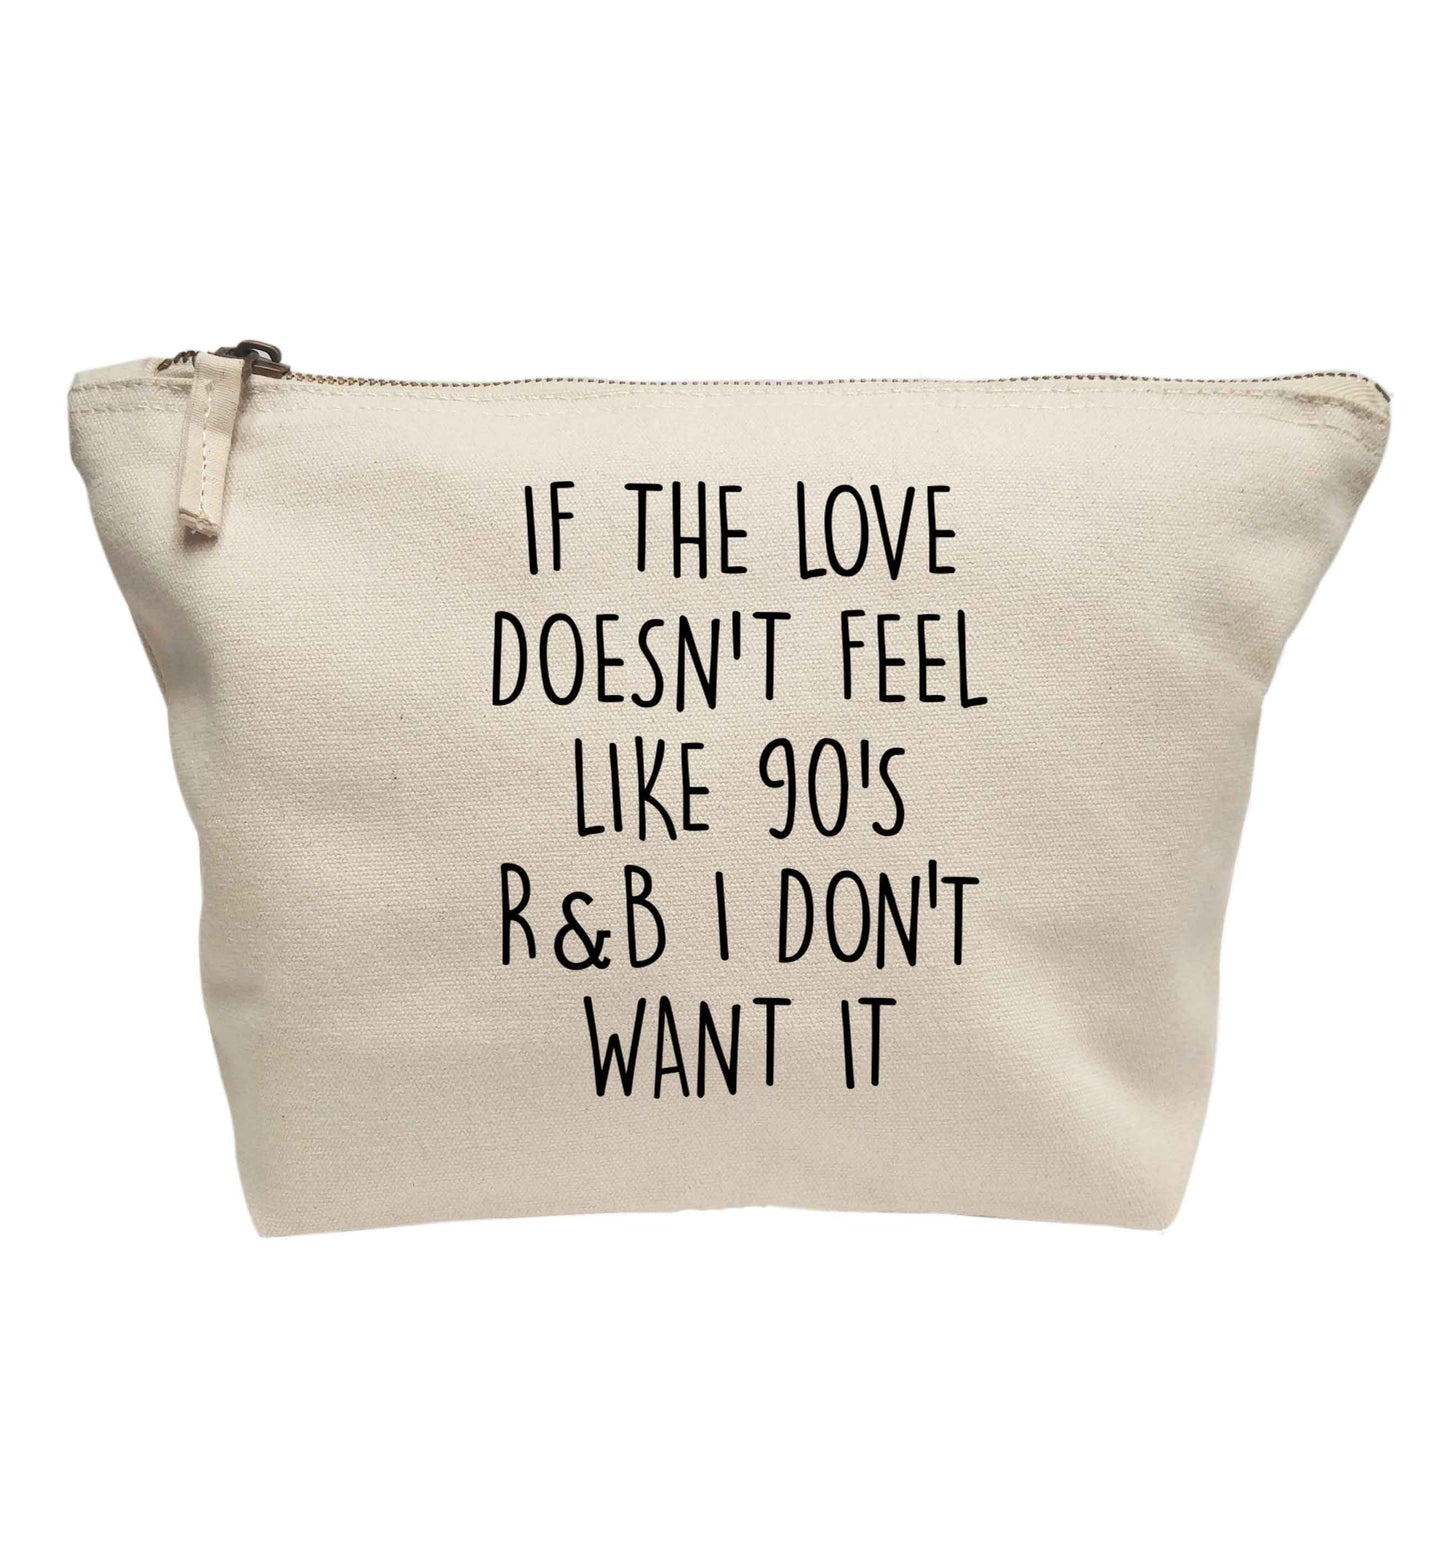 If the love doesn't feel like 90's r&b I don't want it | Makeup / wash bag